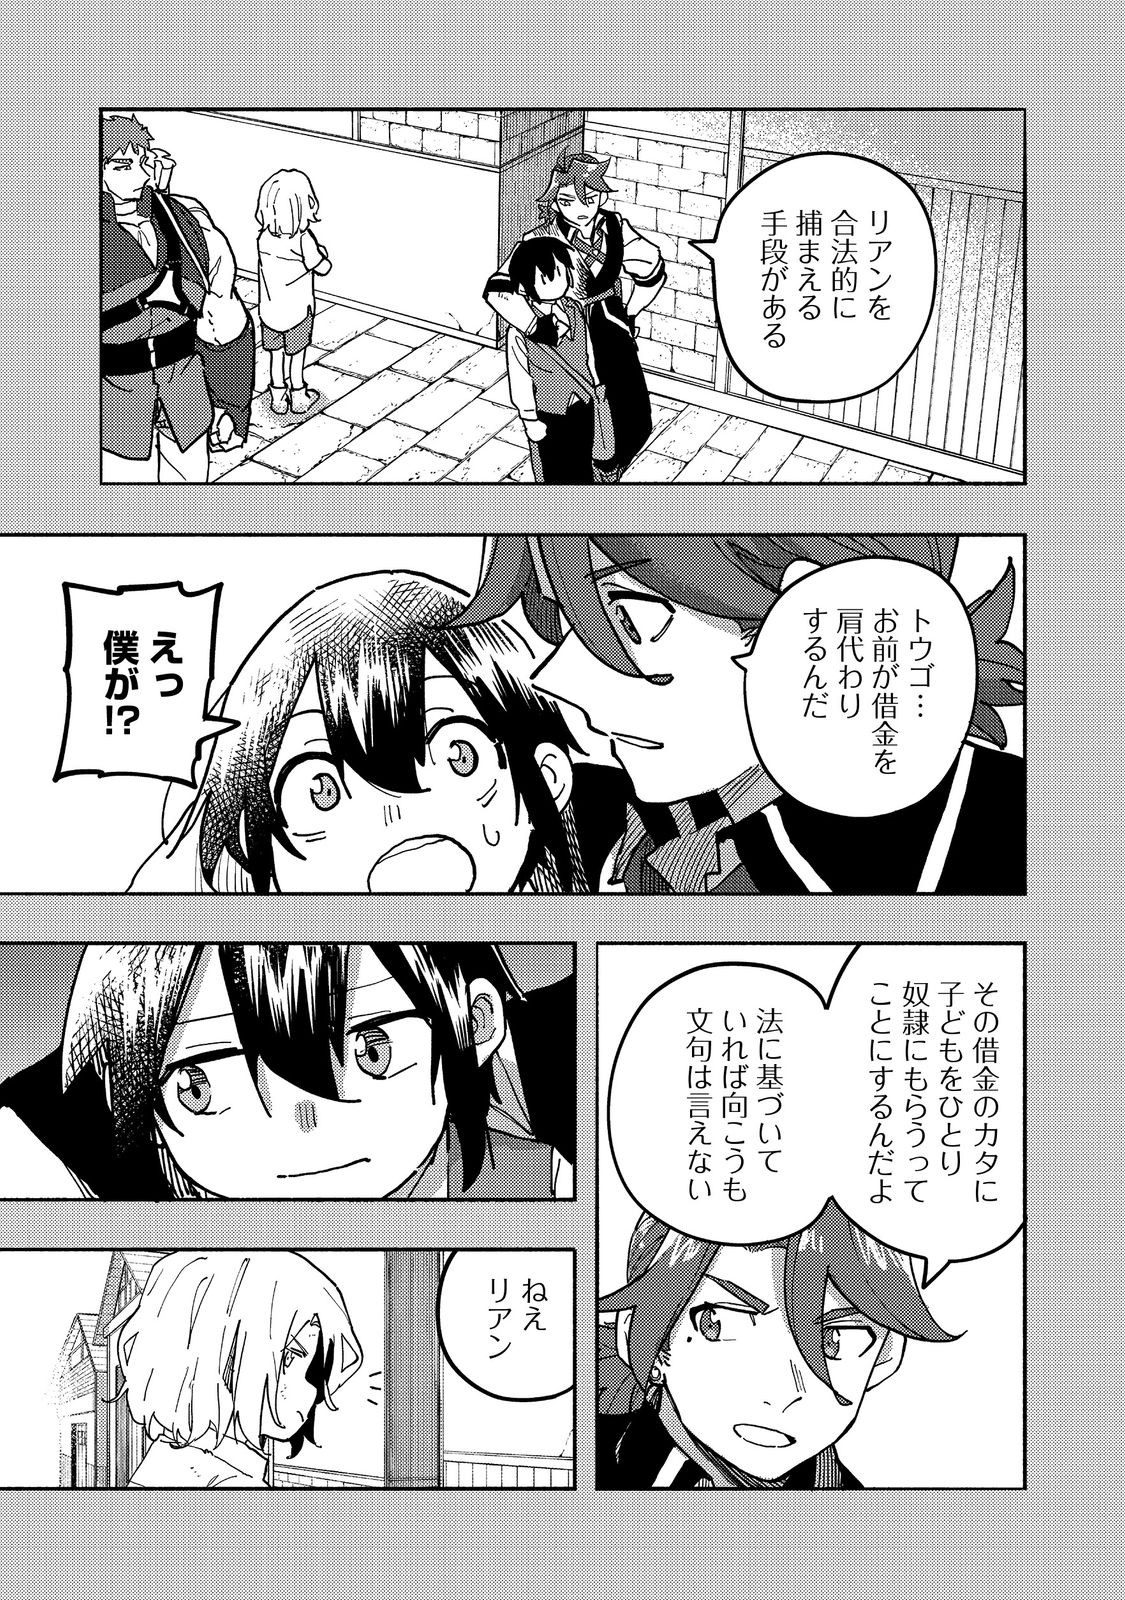 Kyou mo E ni Kaita Mochi ga Umai - Chapter 26 - Page 1